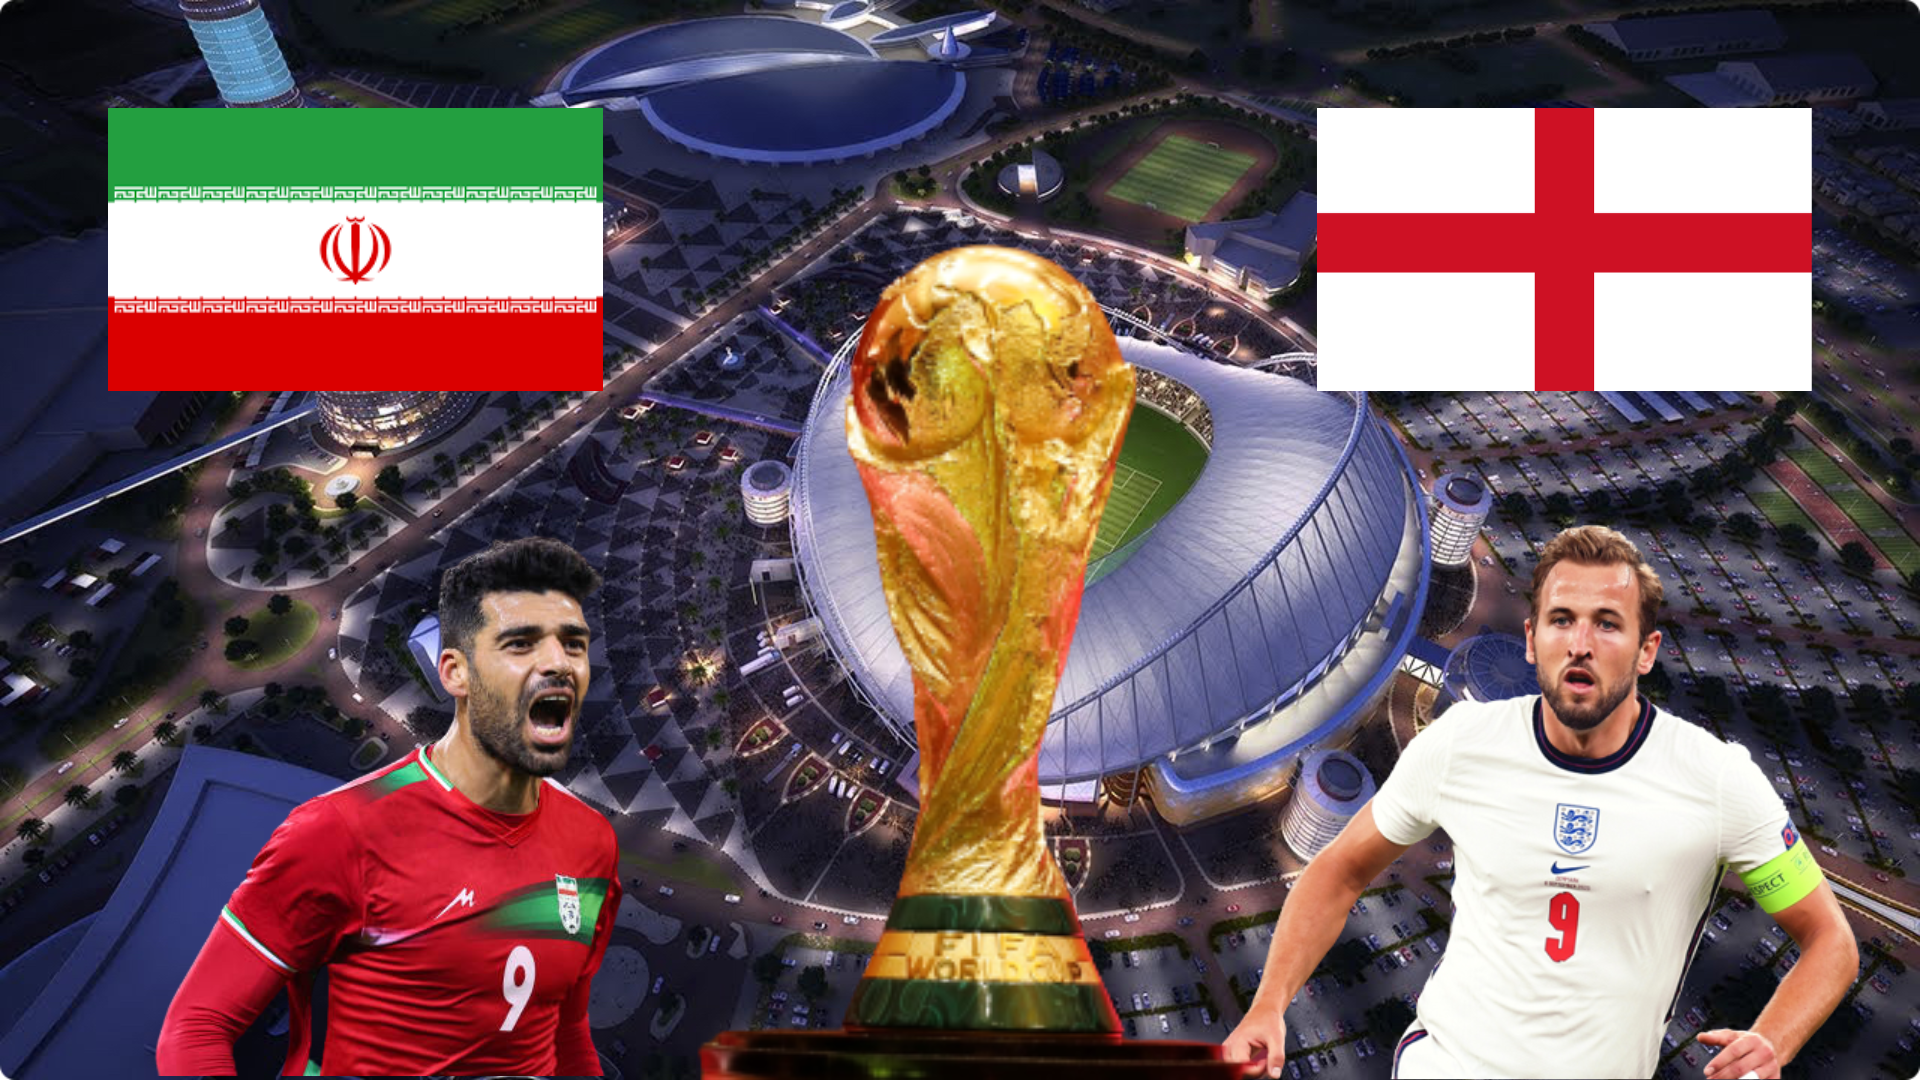 Iran vs England